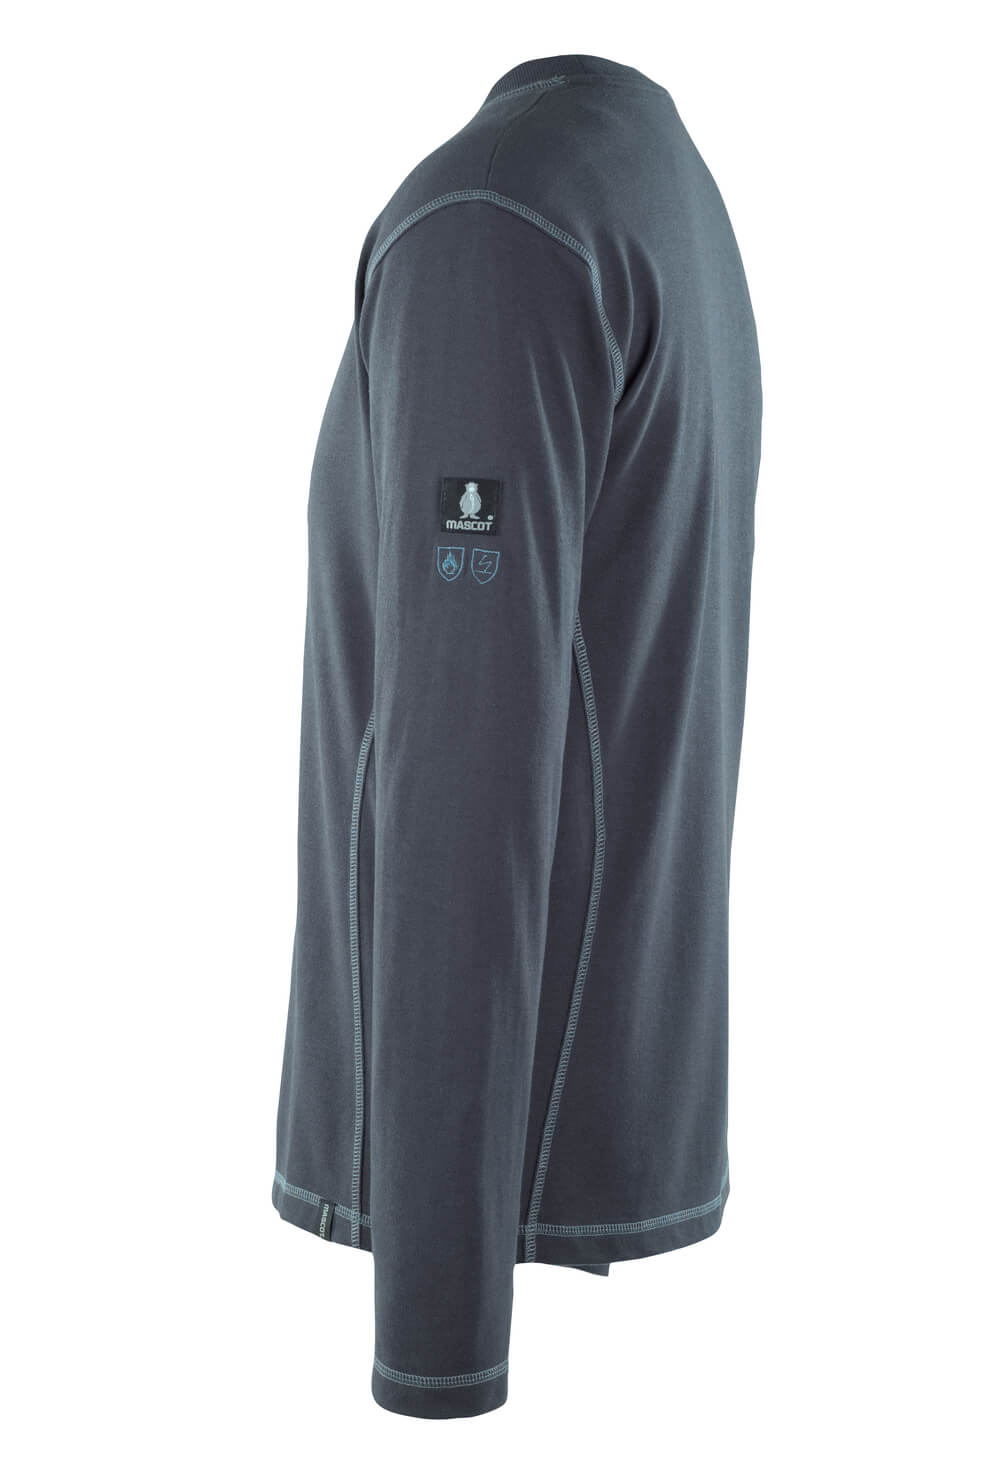 MASCOT® MULTISAFE T-Shirt, Langarm »Muri« Gr. 2XL, schwarzblau - gibt’s bei HUG Technik ✓